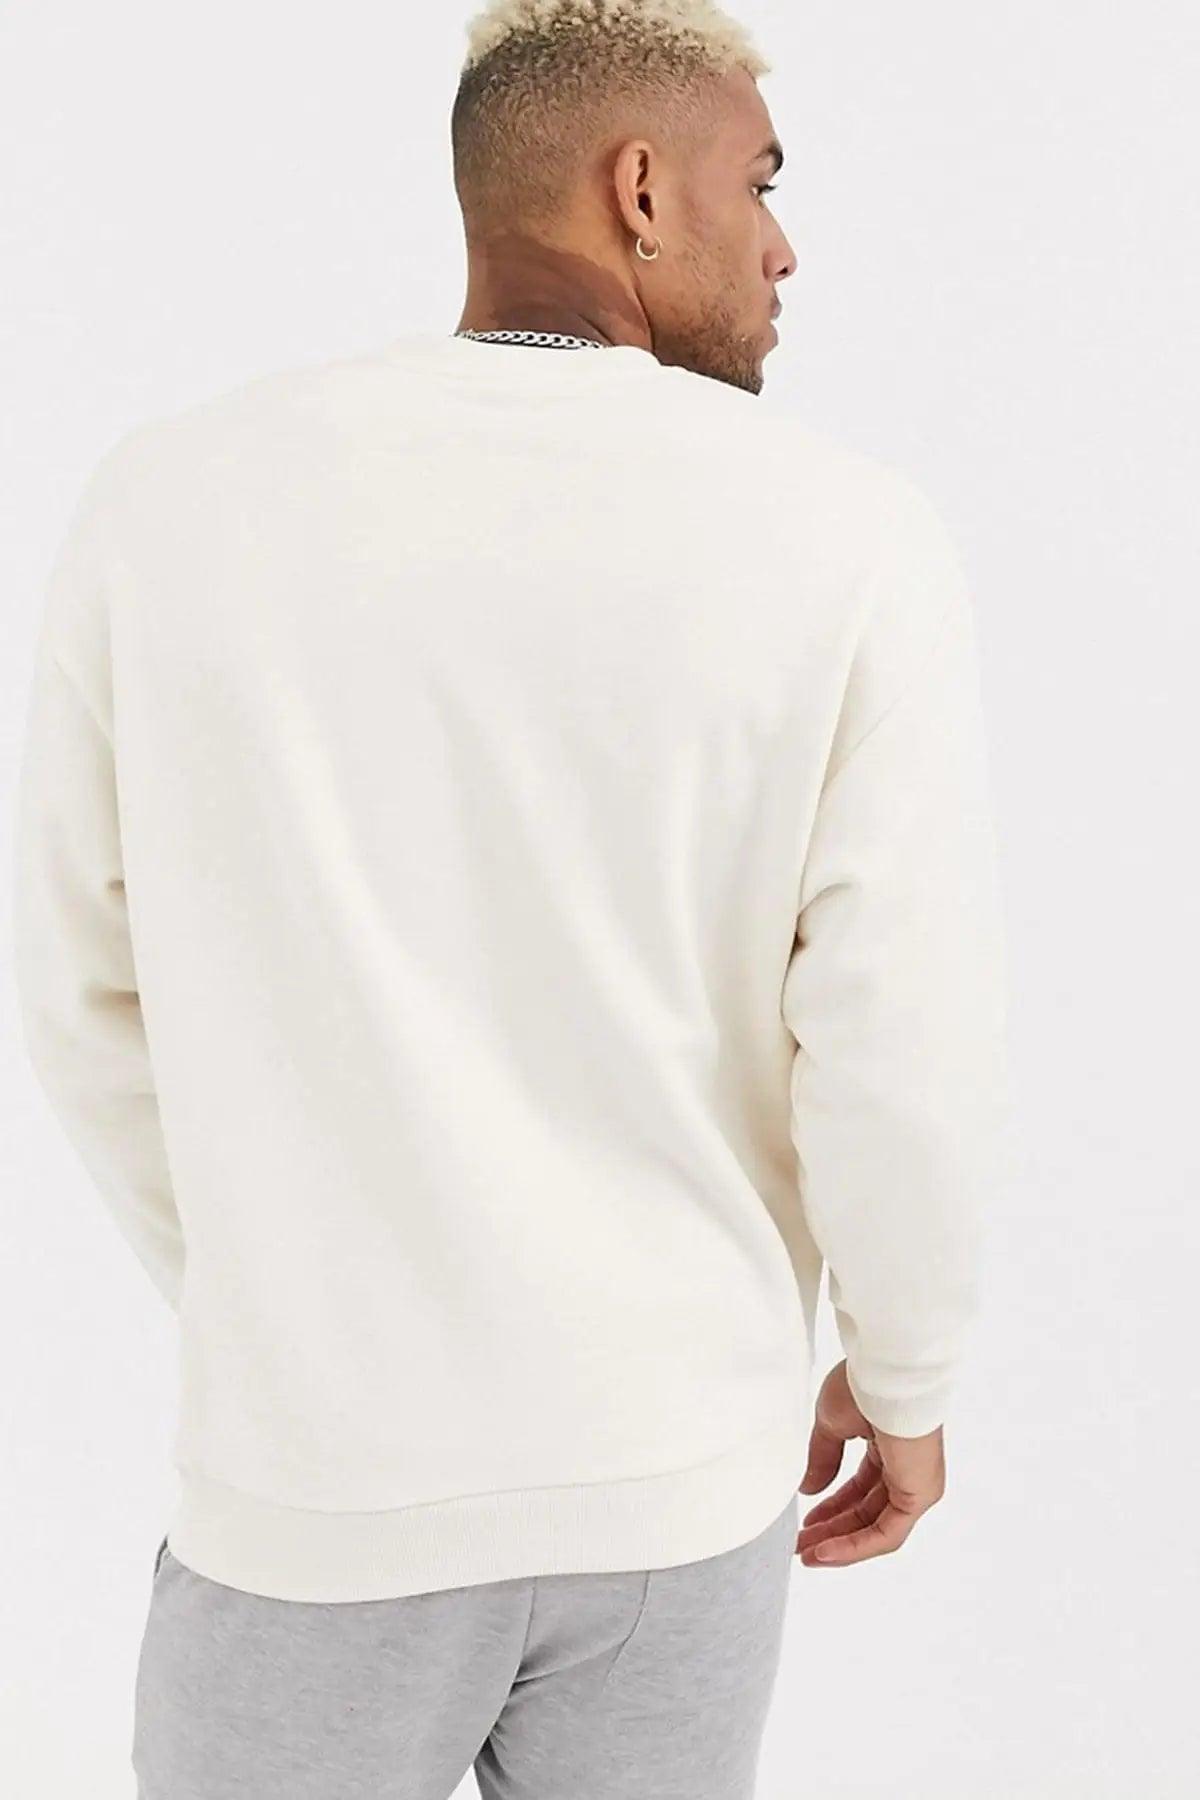 4x4 Offroad Oversize Erkek Sweatshirt - PΛSΛGE